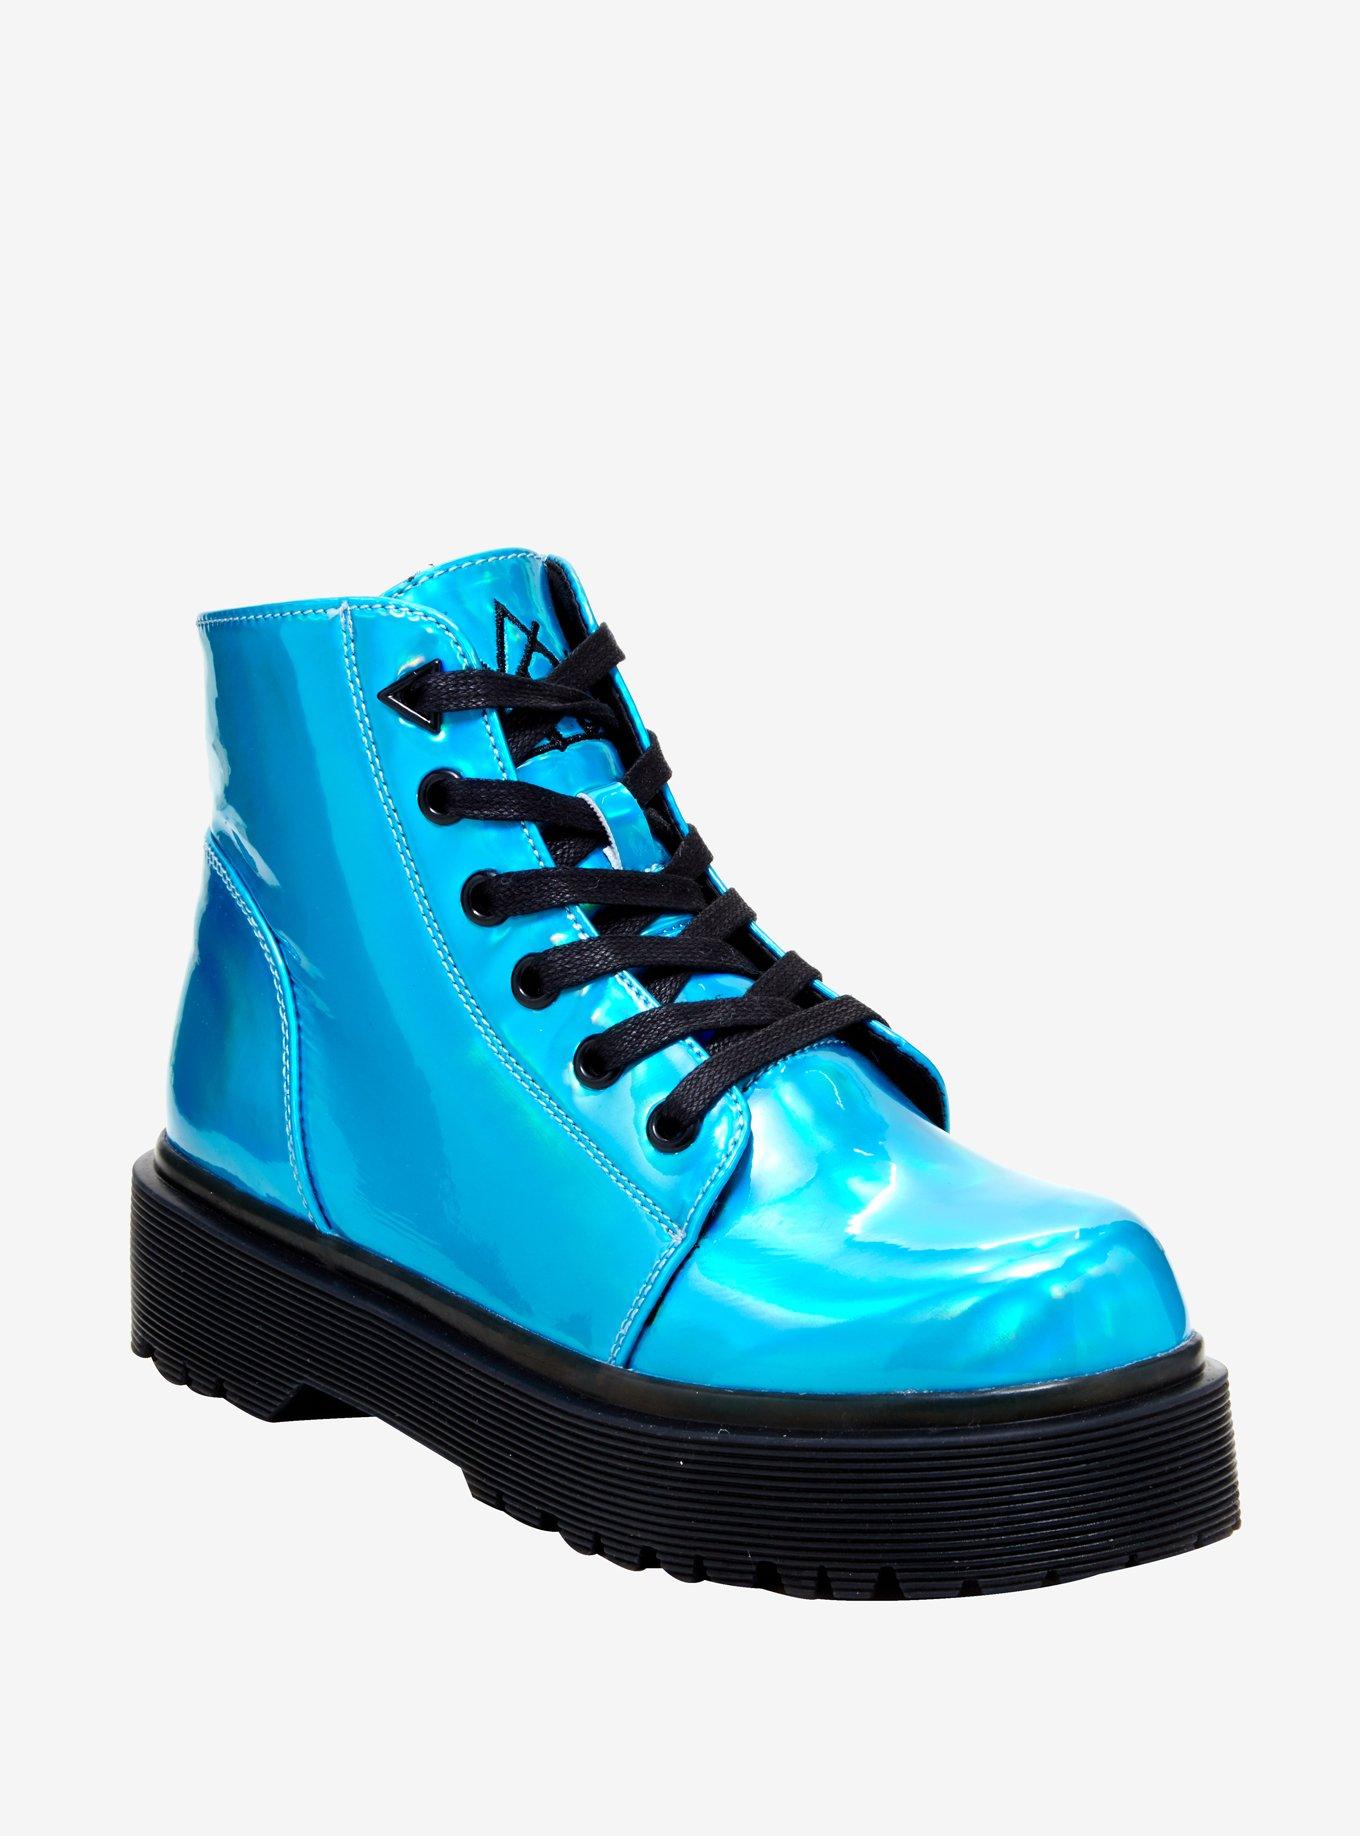 Y.R.U. Slayr Blue Hologram Combat Boots, BLUE, hi-res